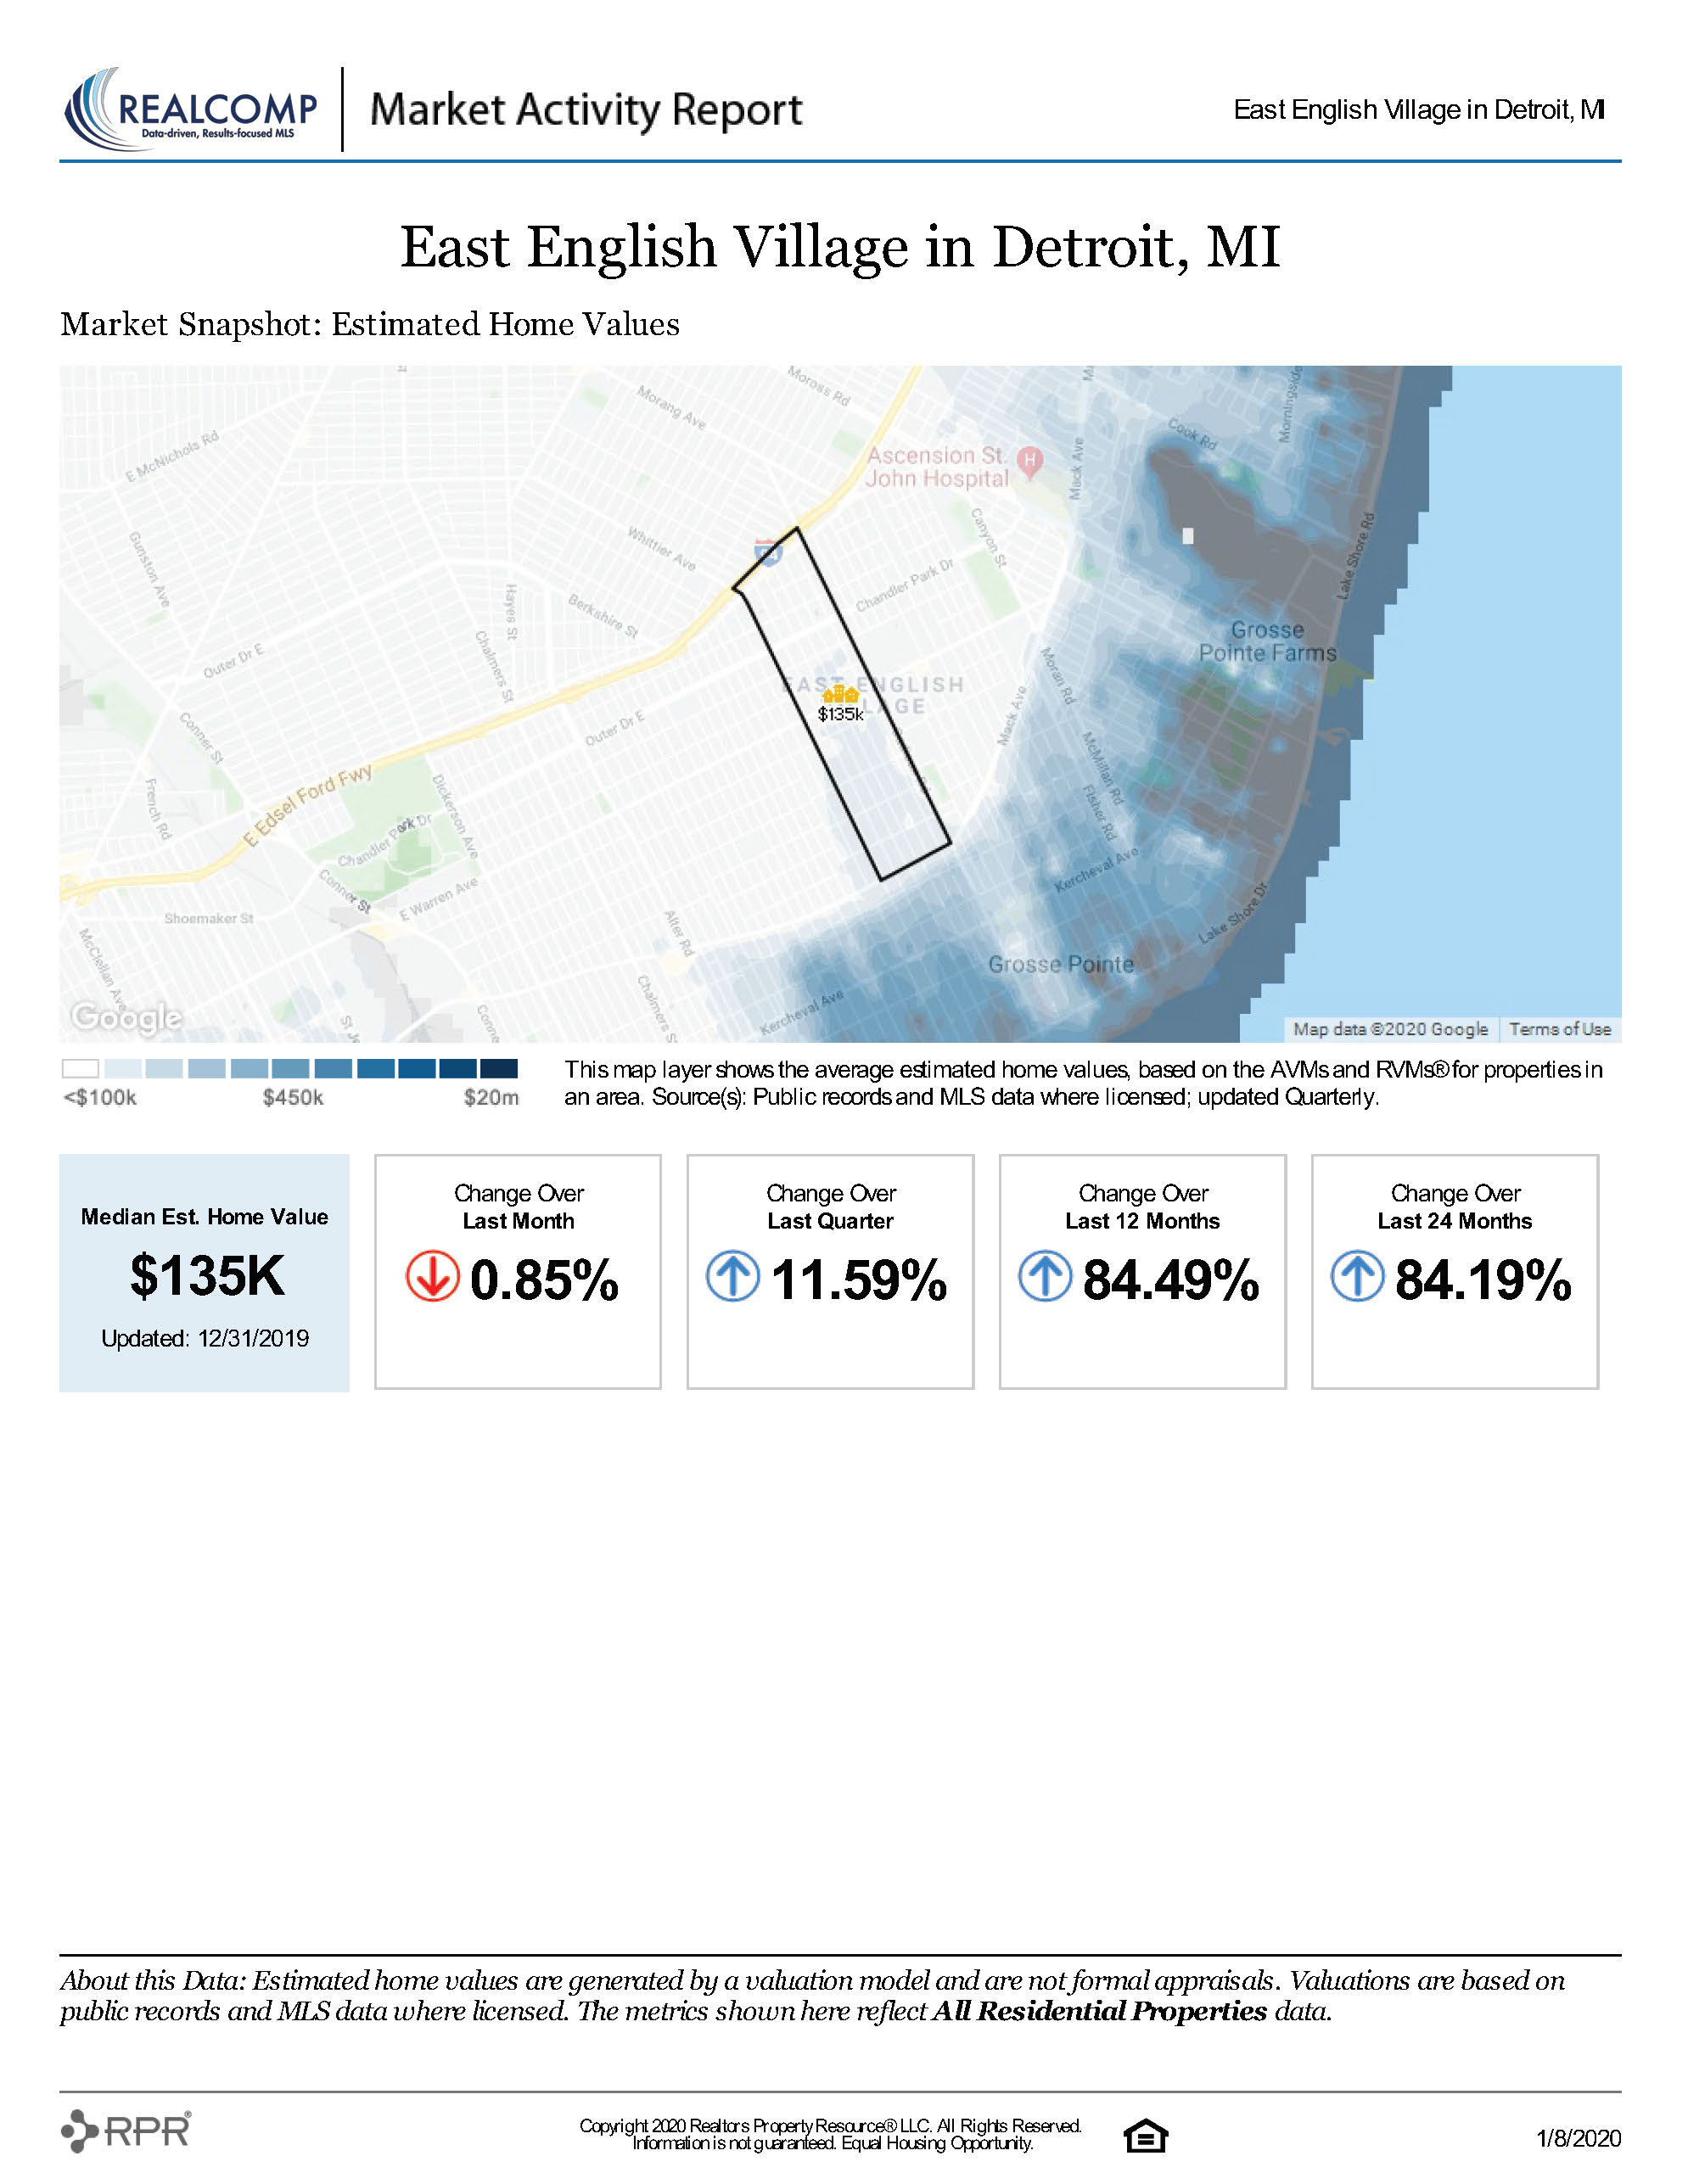 Market-Activity-Report_East-English-Village-in-Detroit-MI_2020-01-08-18-38-24_Page_02.jpg